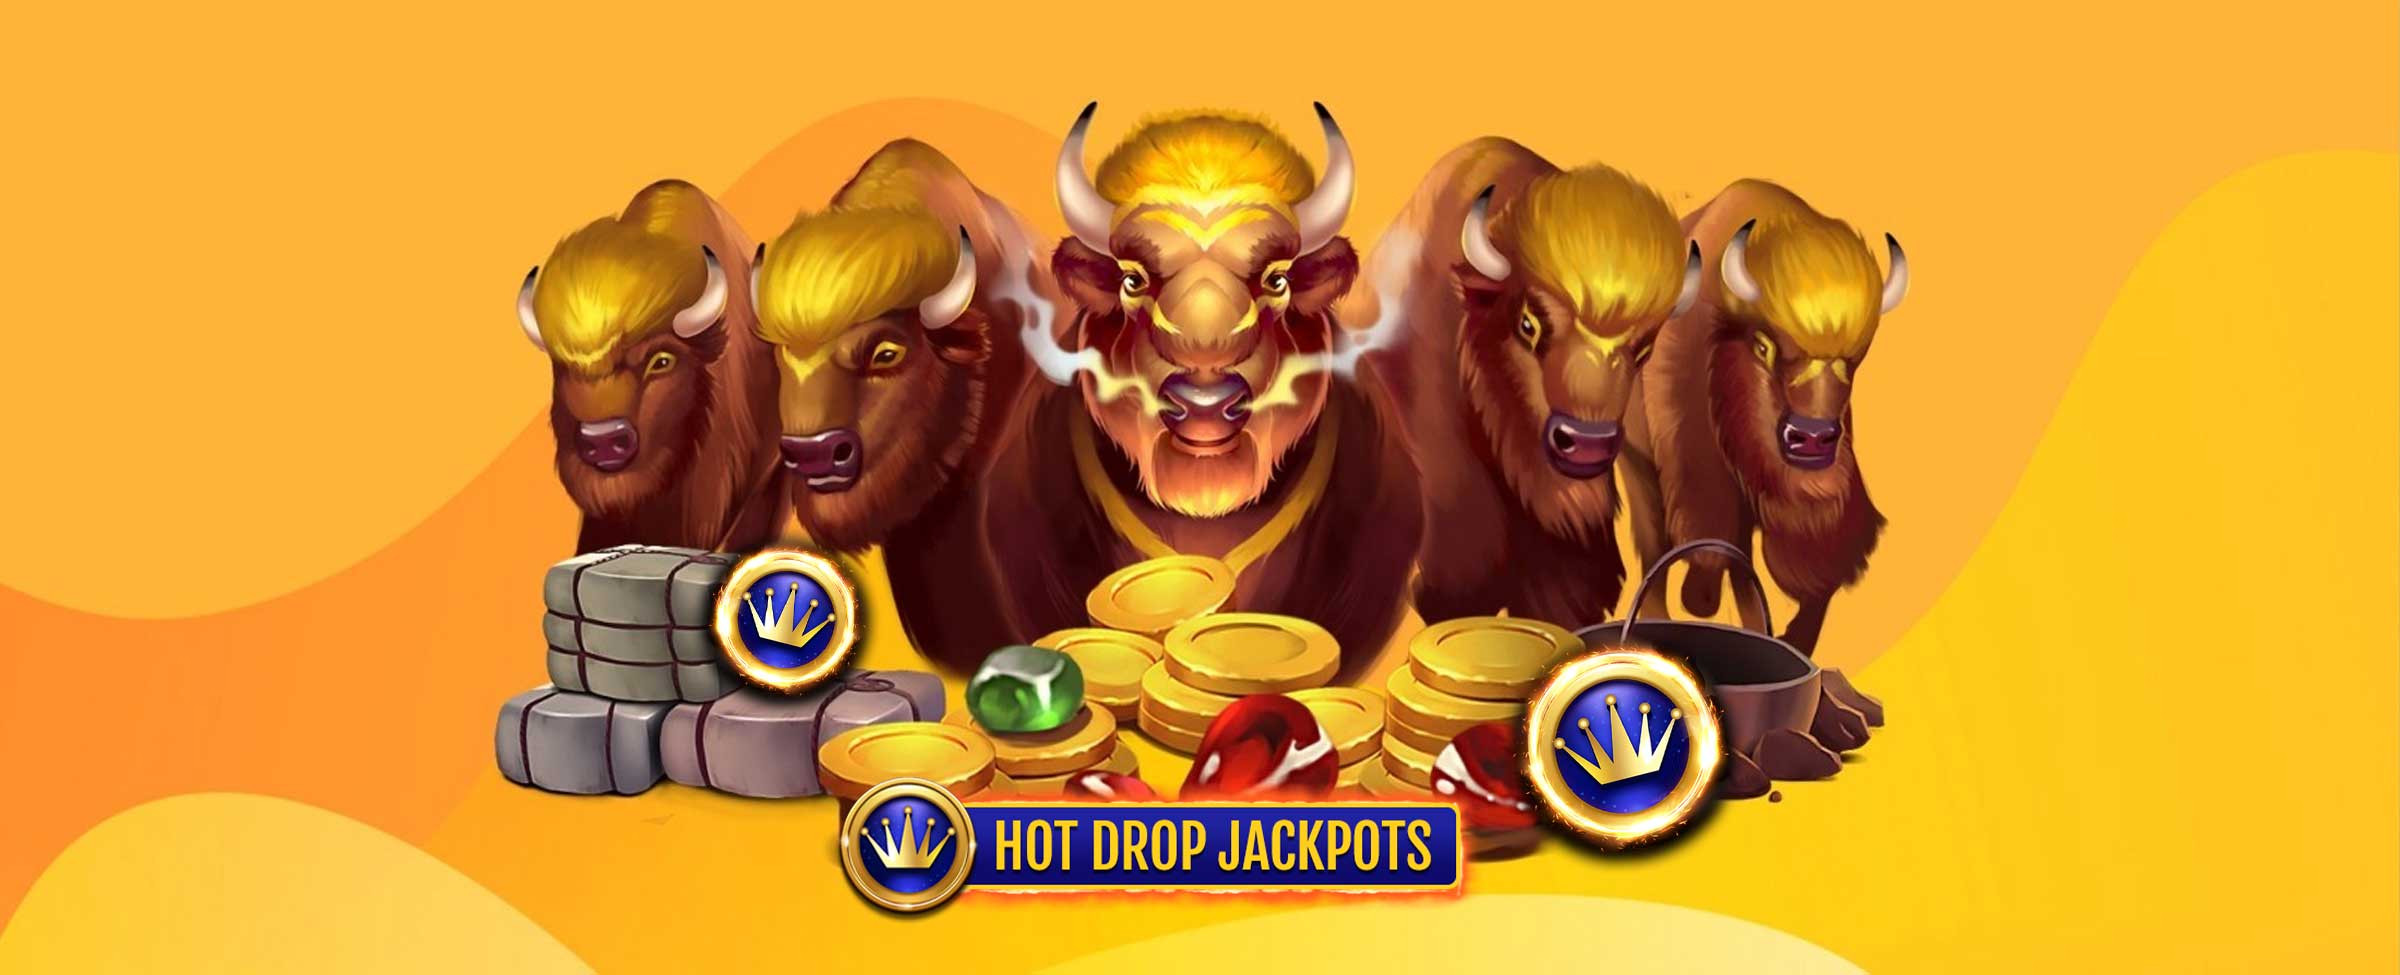 If you love Golden Buffalo, you'll also love the Hot Drop Jackpots Golden Buffalo version!